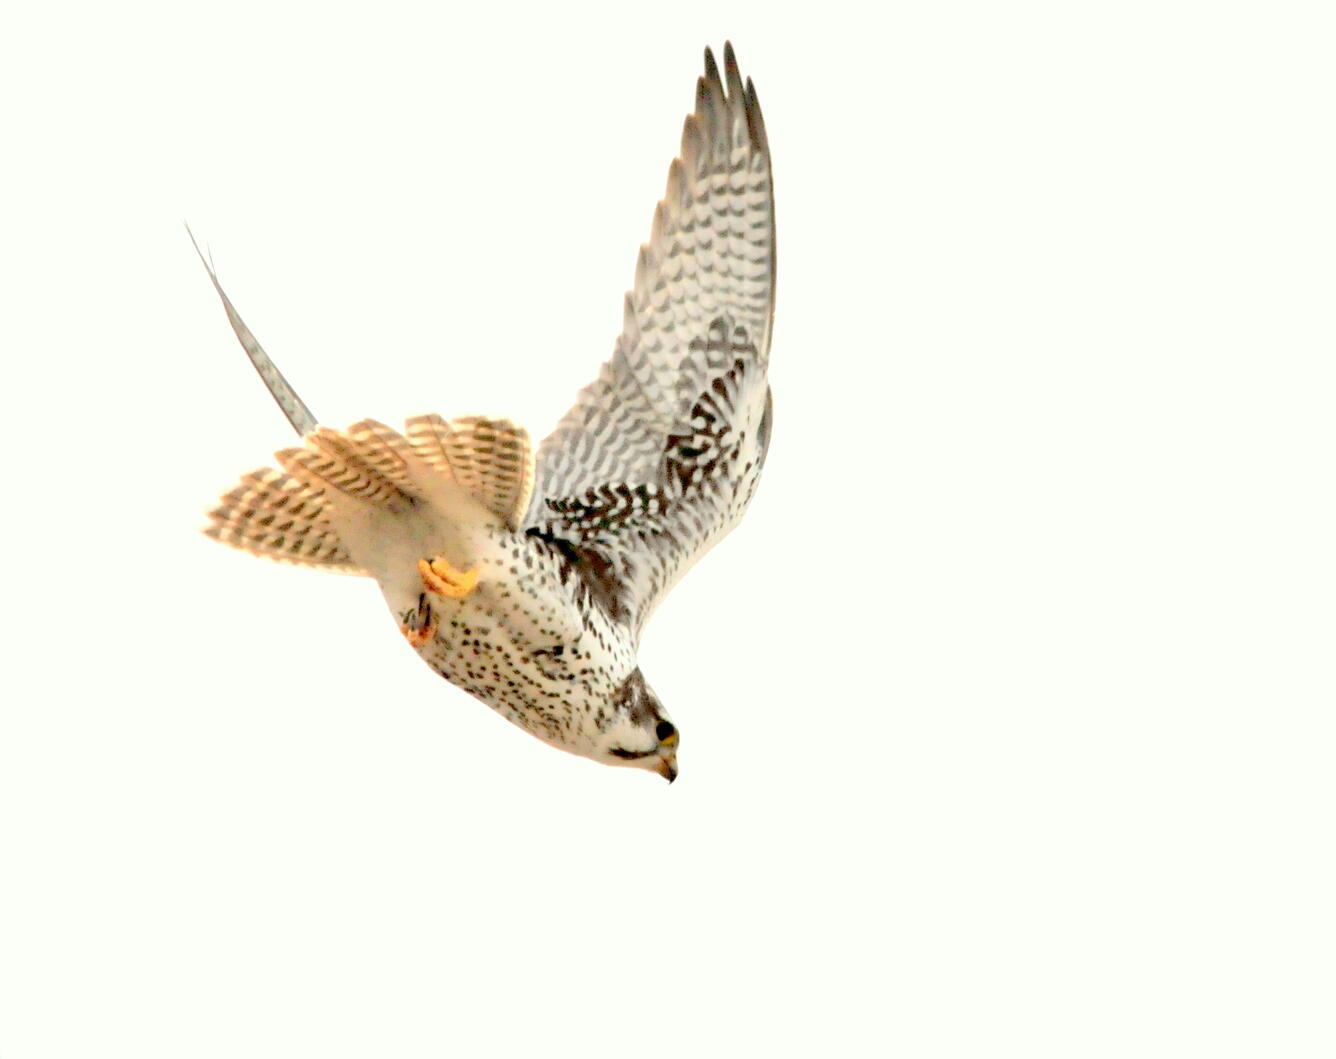 Prairie Falcon in flight